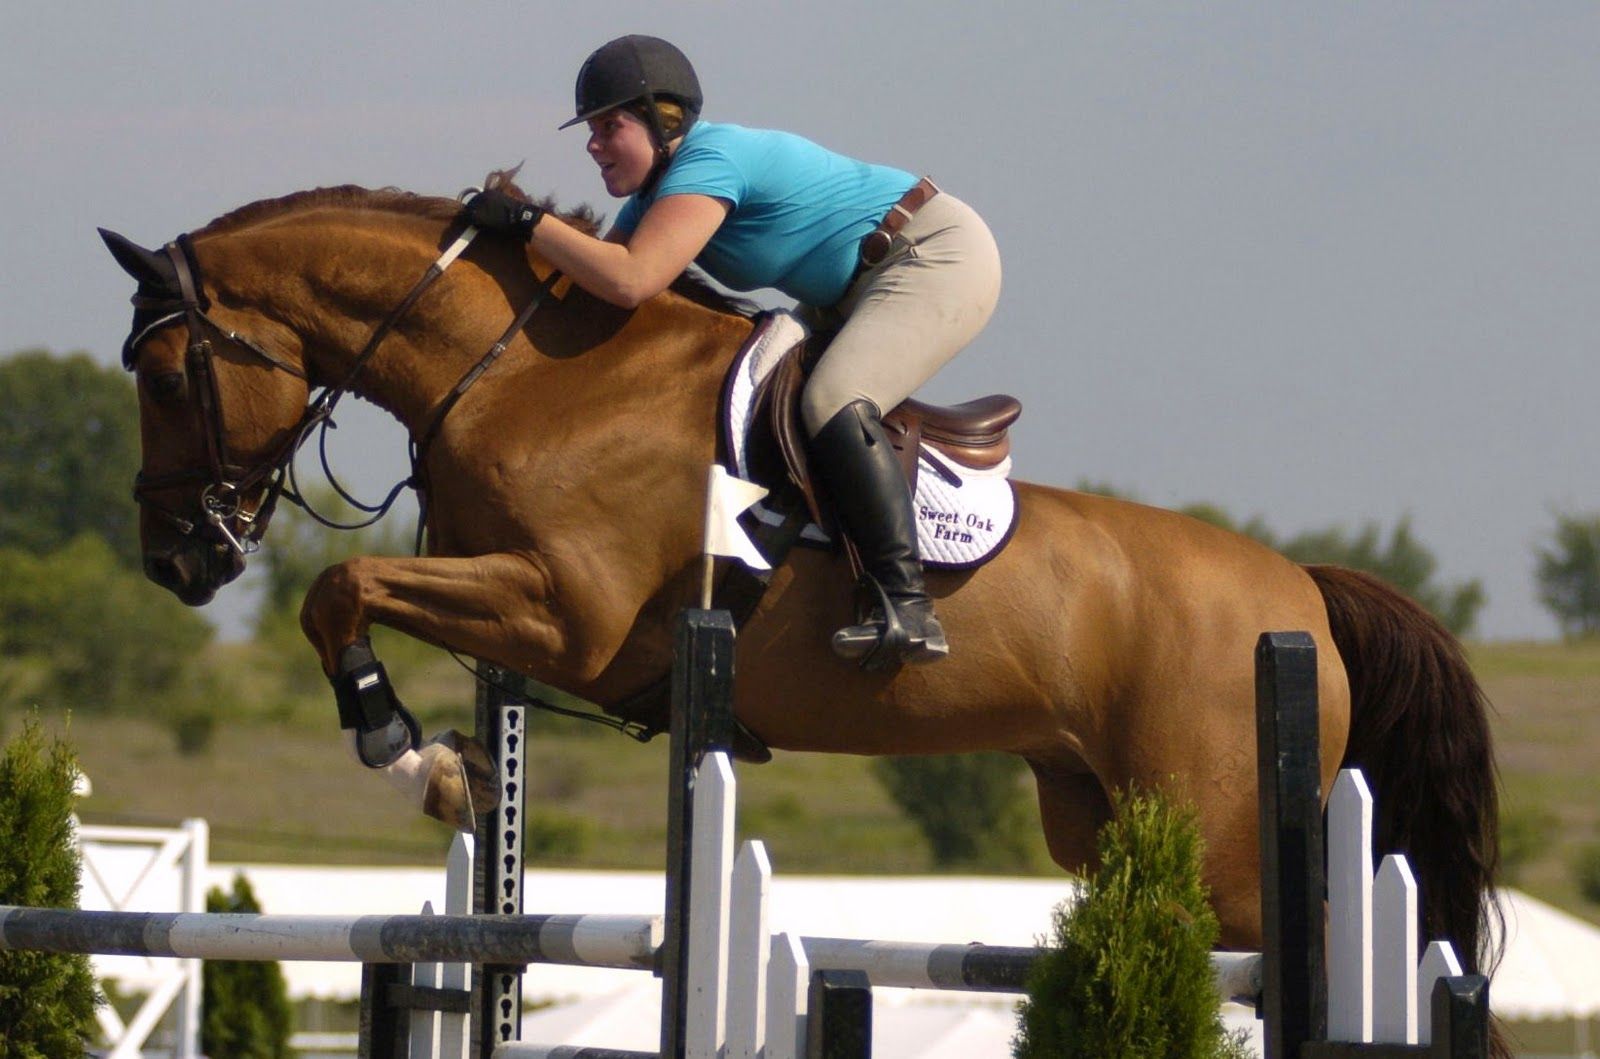 HD Animals Wallpaper: Brown Horse Jumping Wallpaper. Horse jumping, Show jumping horses, Horses